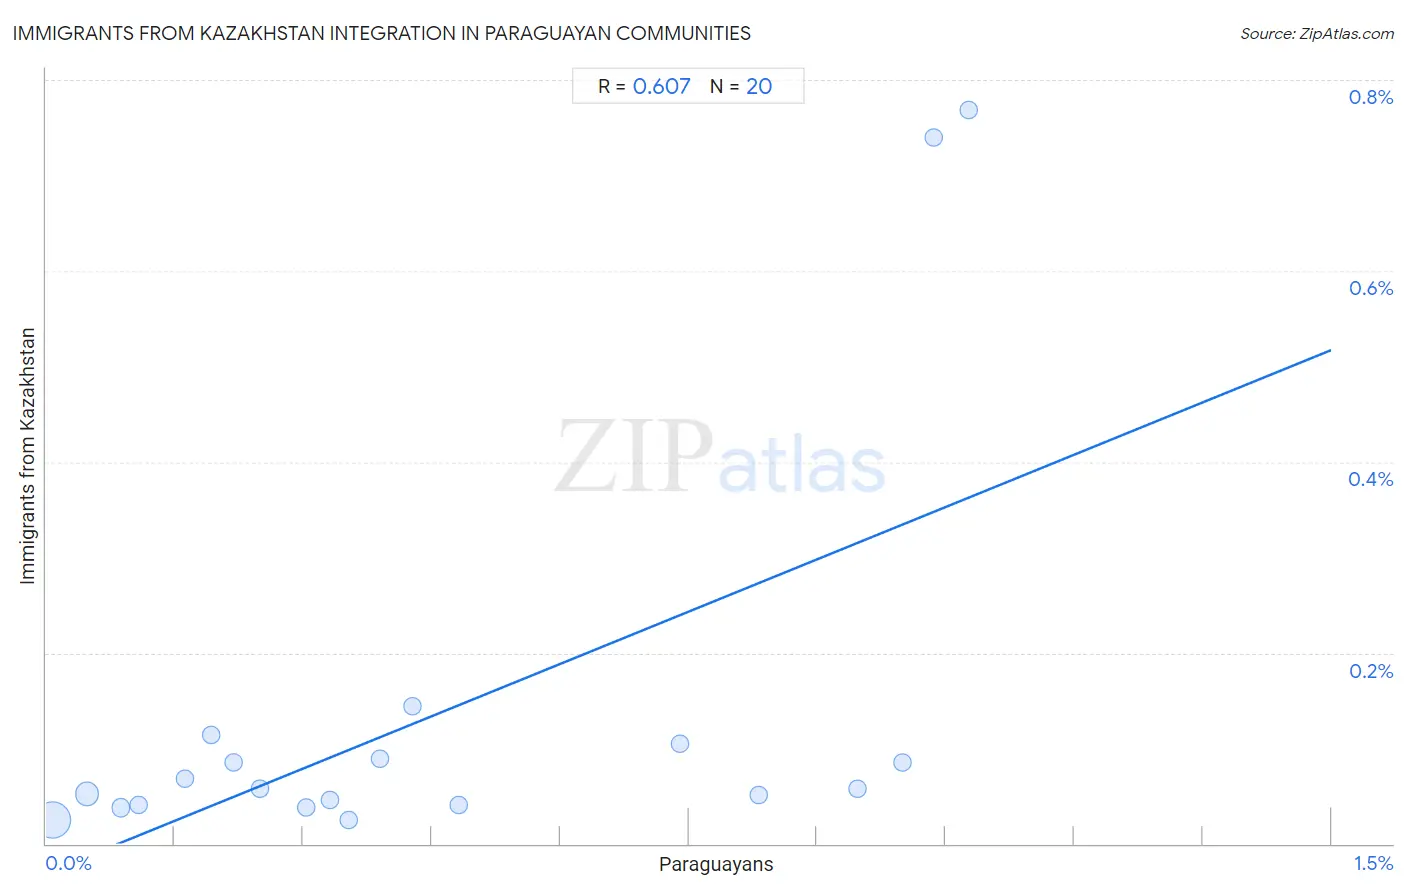 Paraguayan Integration in Immigrants from Kazakhstan Communities